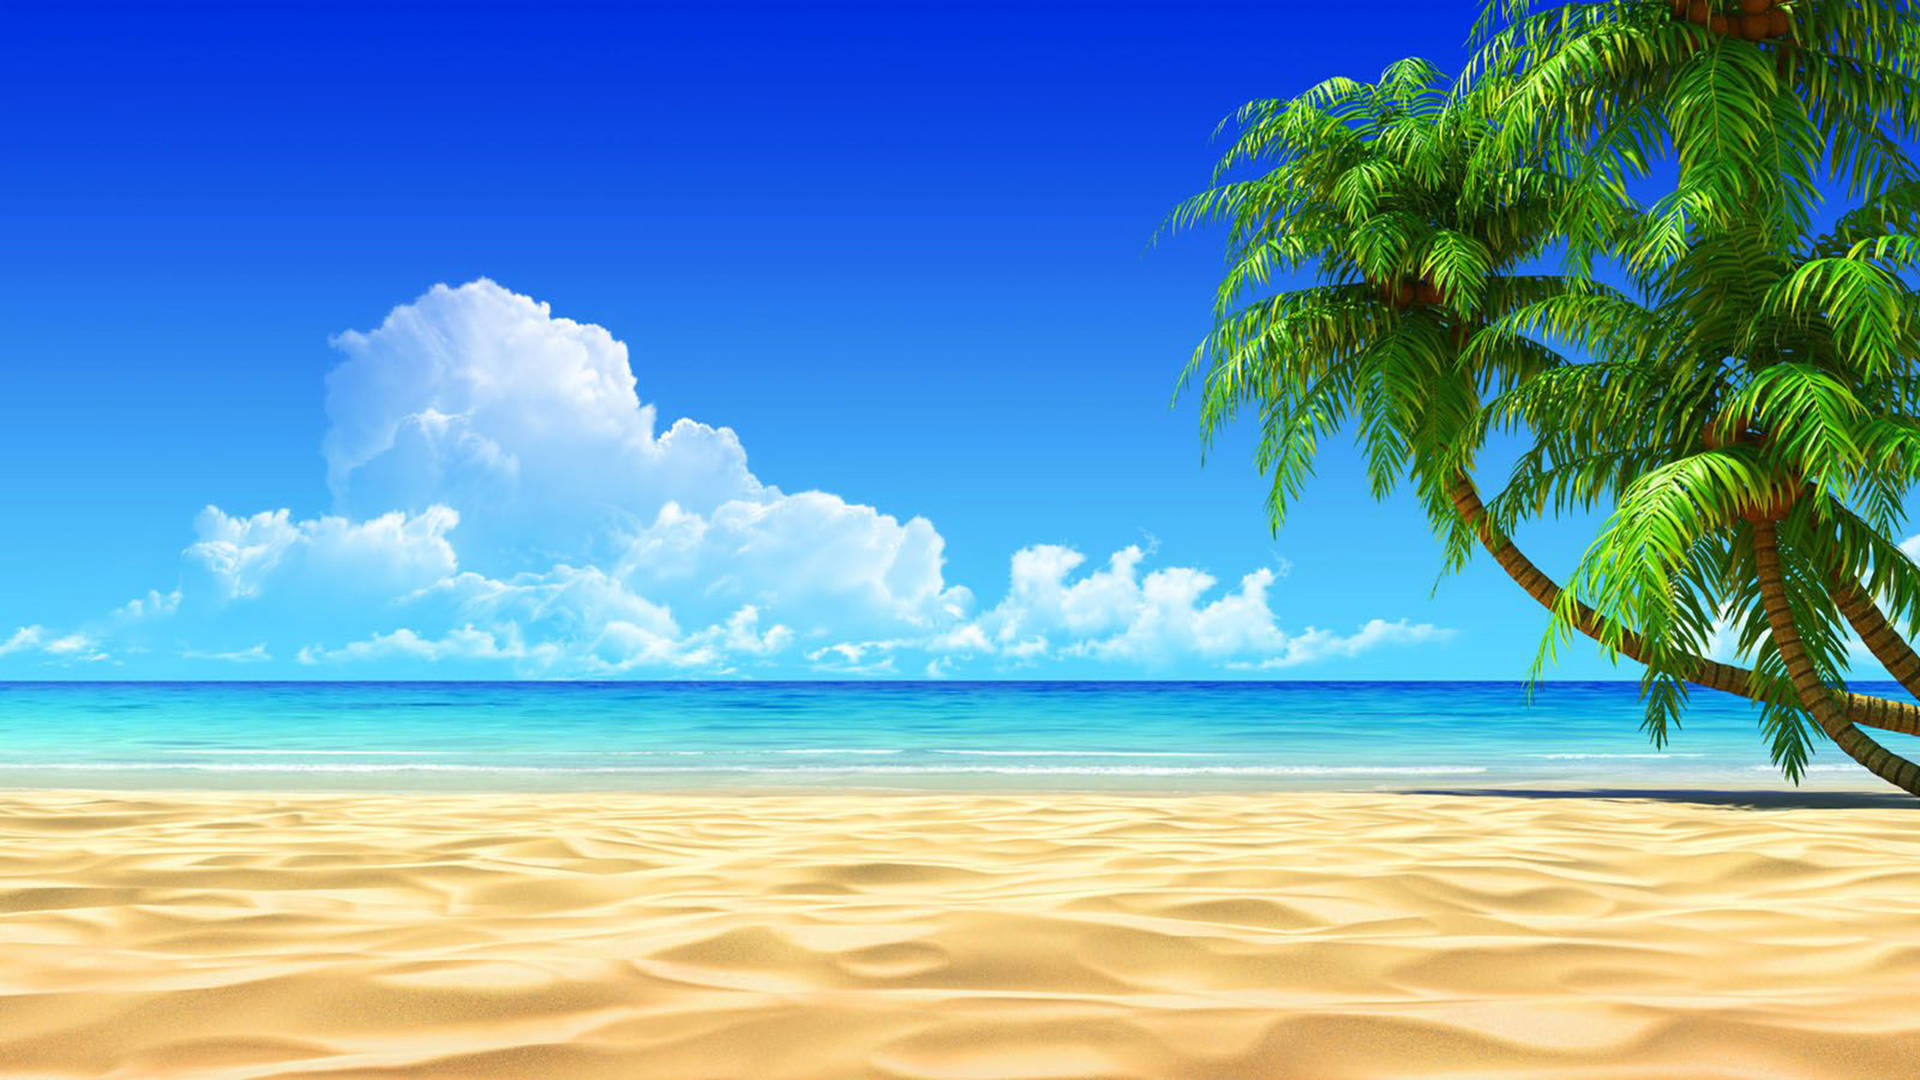 Summer Ocean View Background